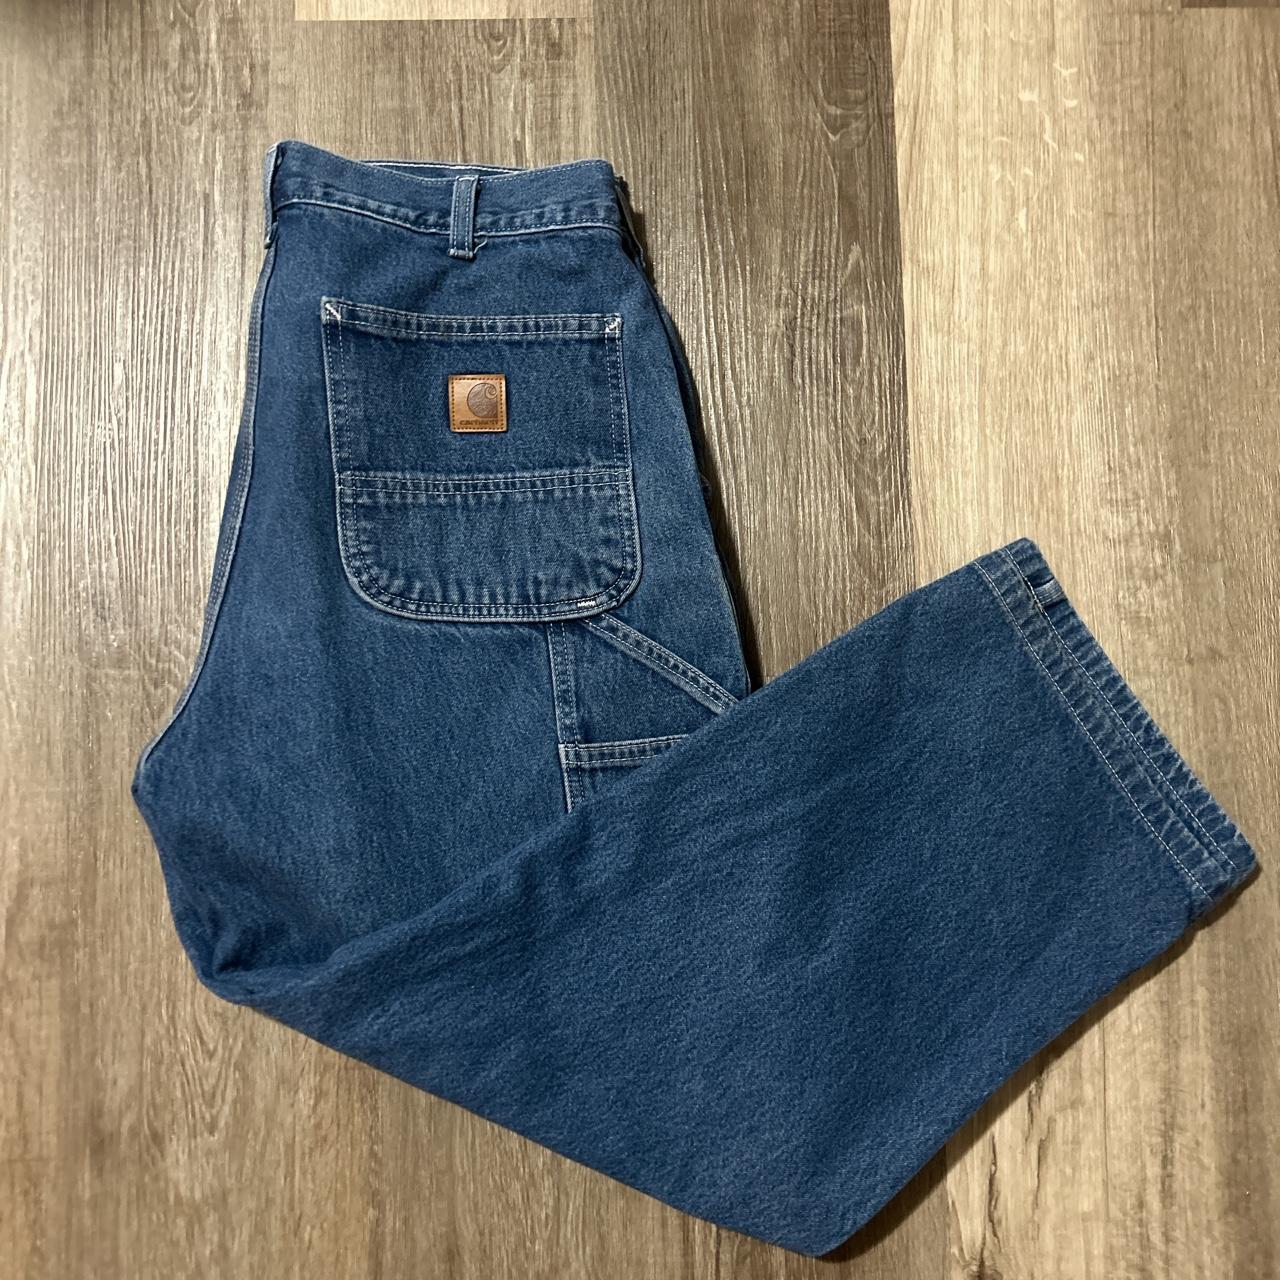 Carharrt Jeans 34x28 - Depop